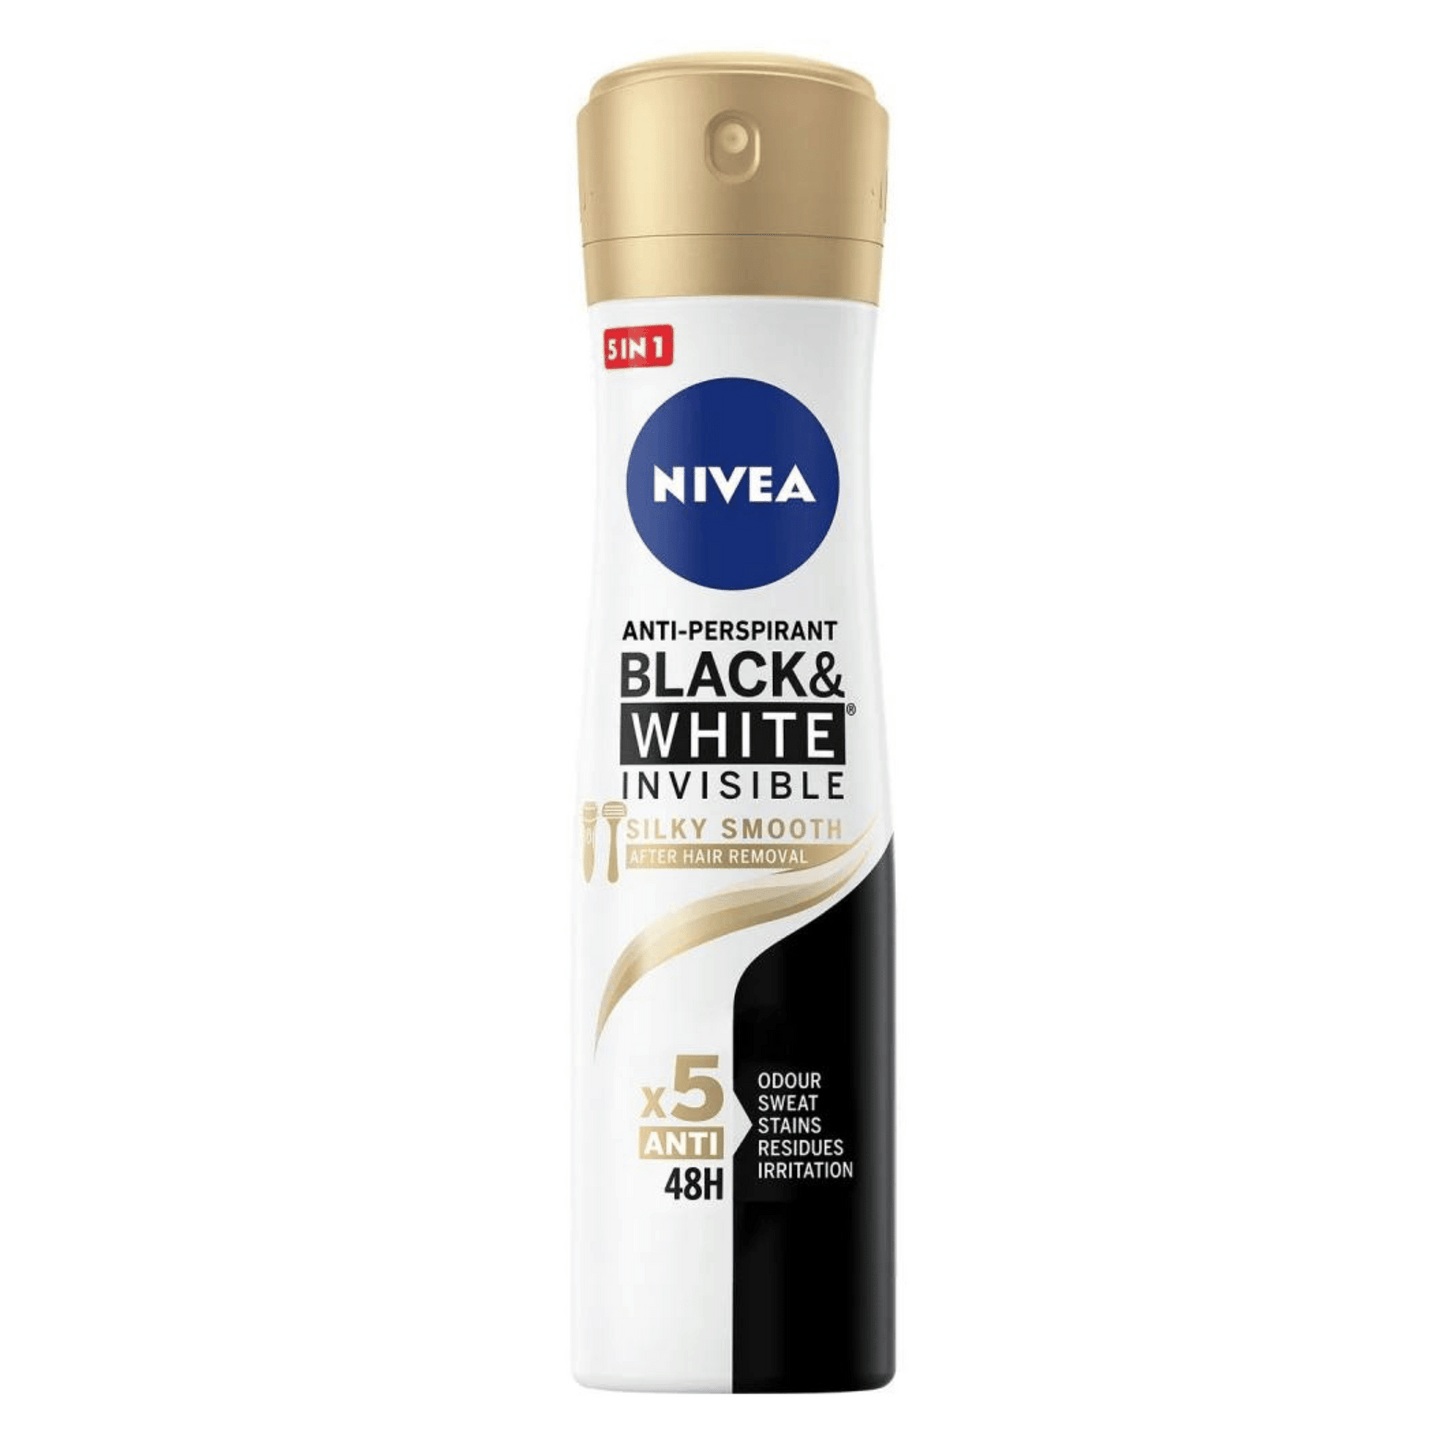 Primary Image of Women's Spray Black & White Invisible Silky Smooth Anti-Perspirant Deodorant